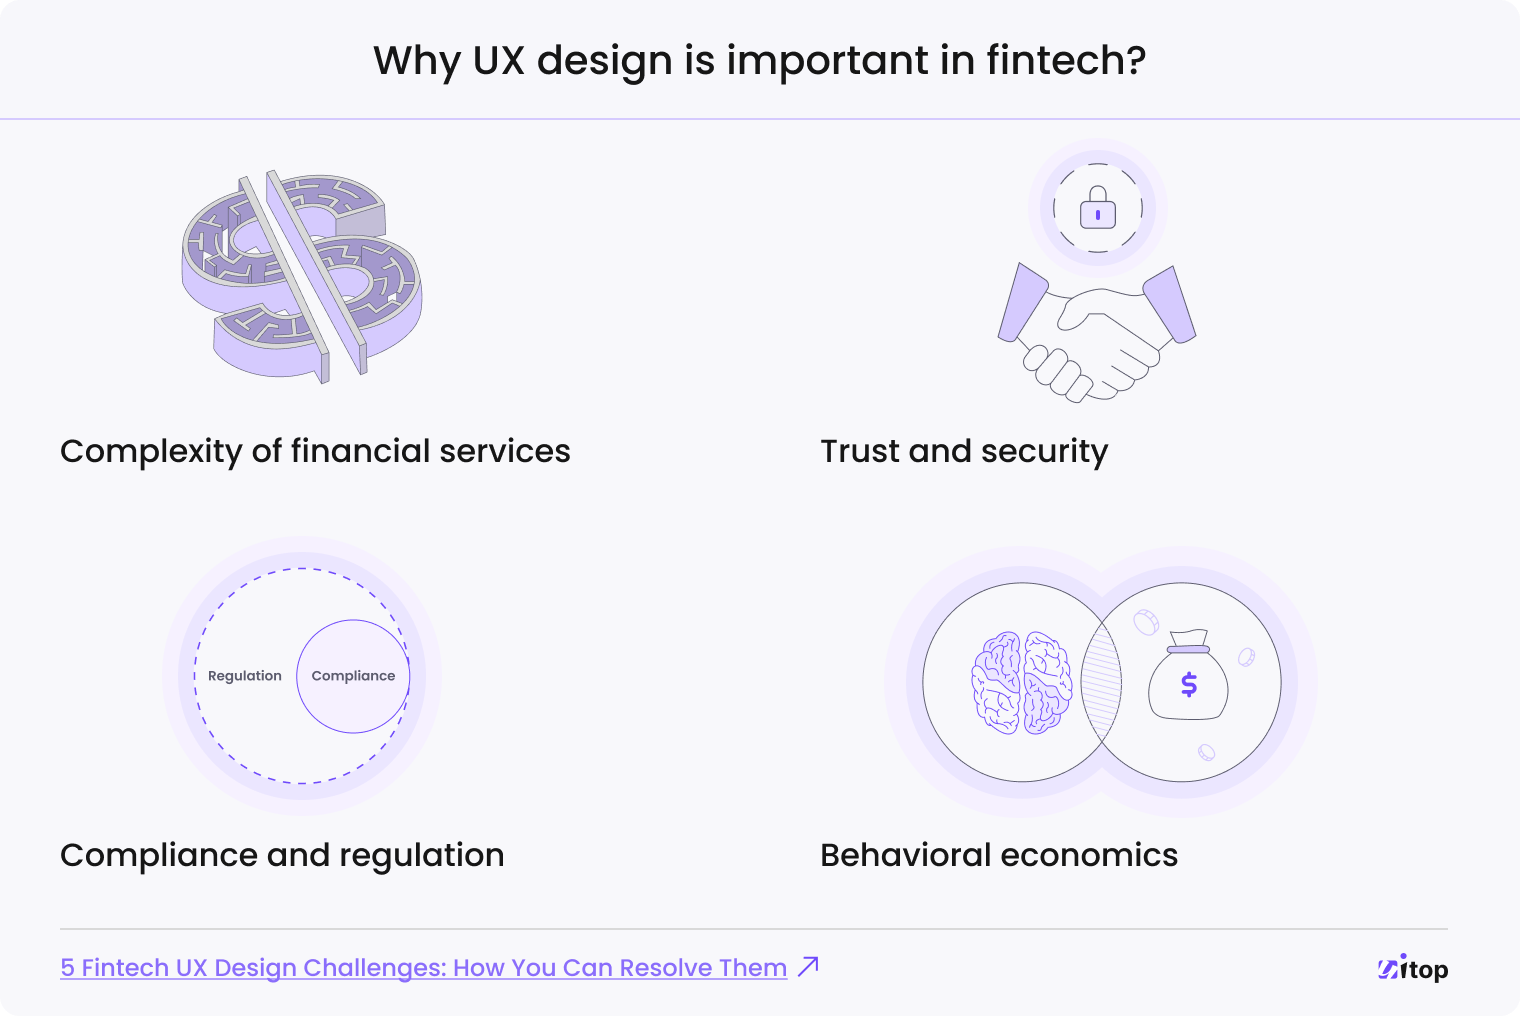 importance of Fintech UX